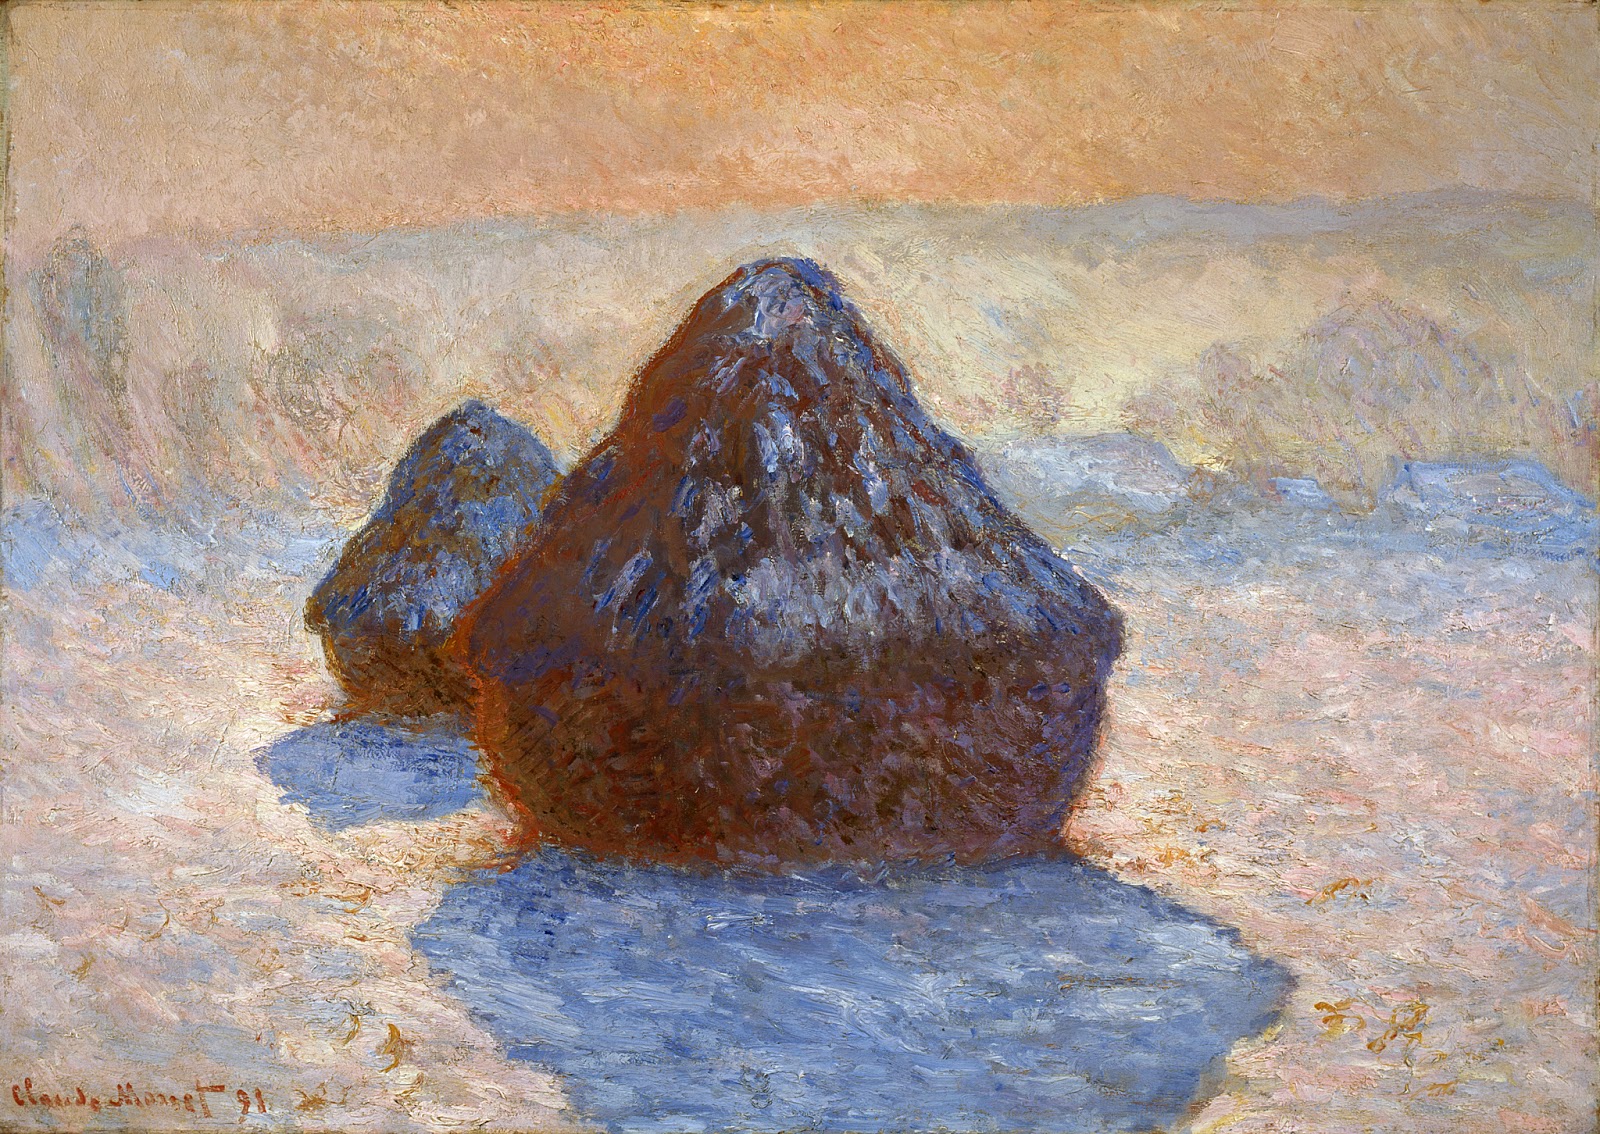 Claude+Monet-1840-1926 (239).jpg